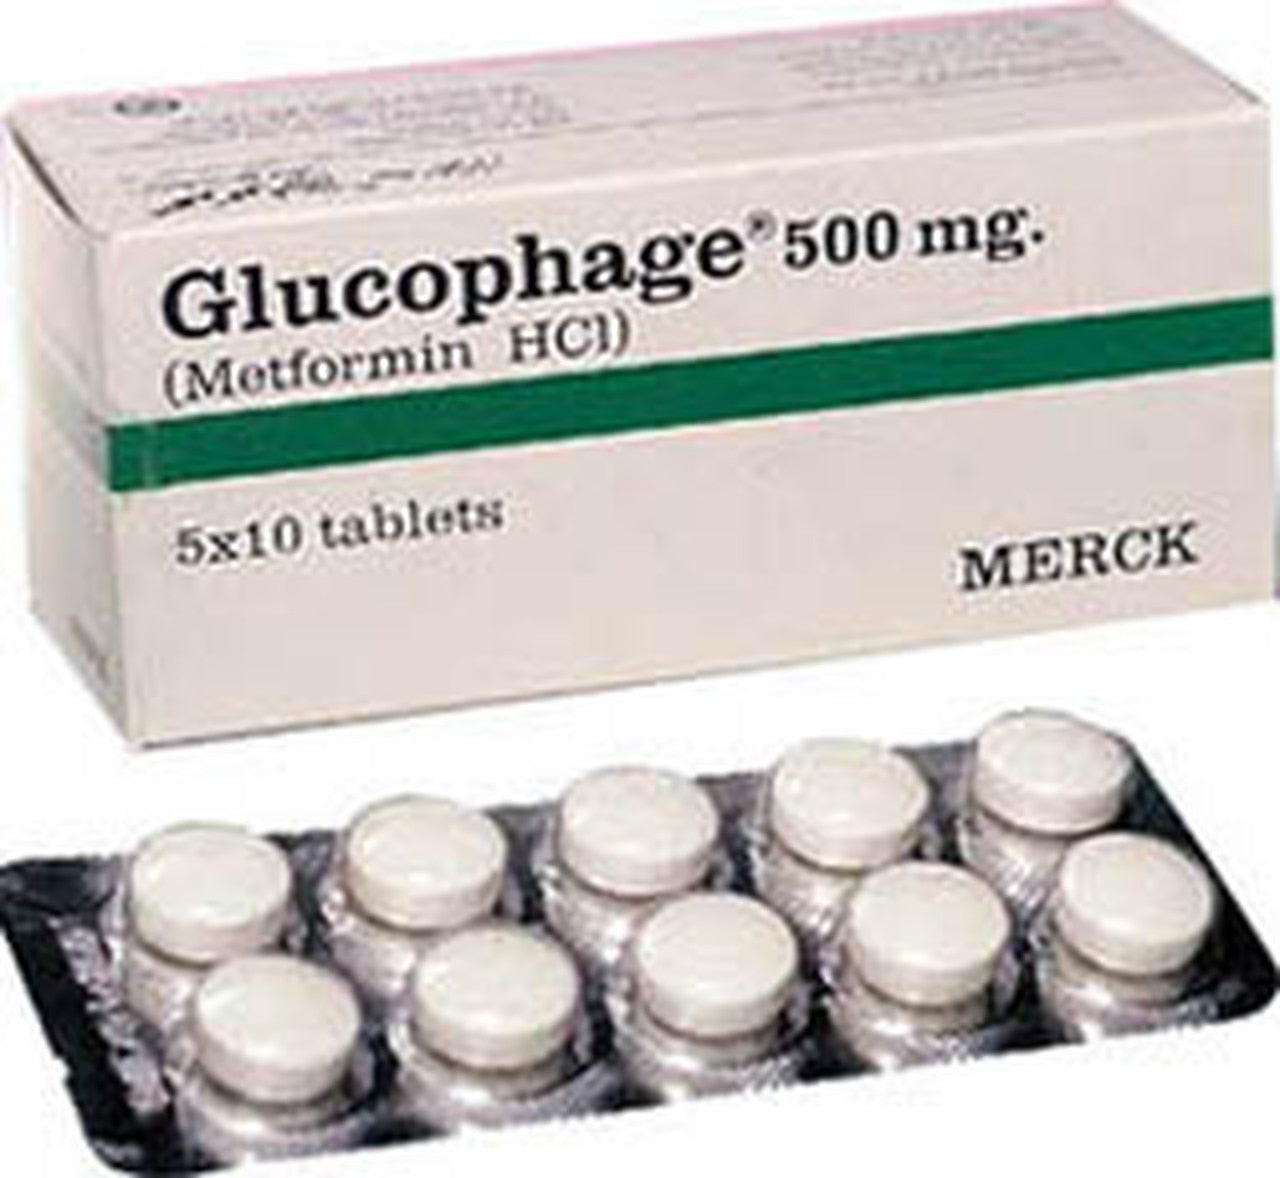 glucophage 500mg tablet price